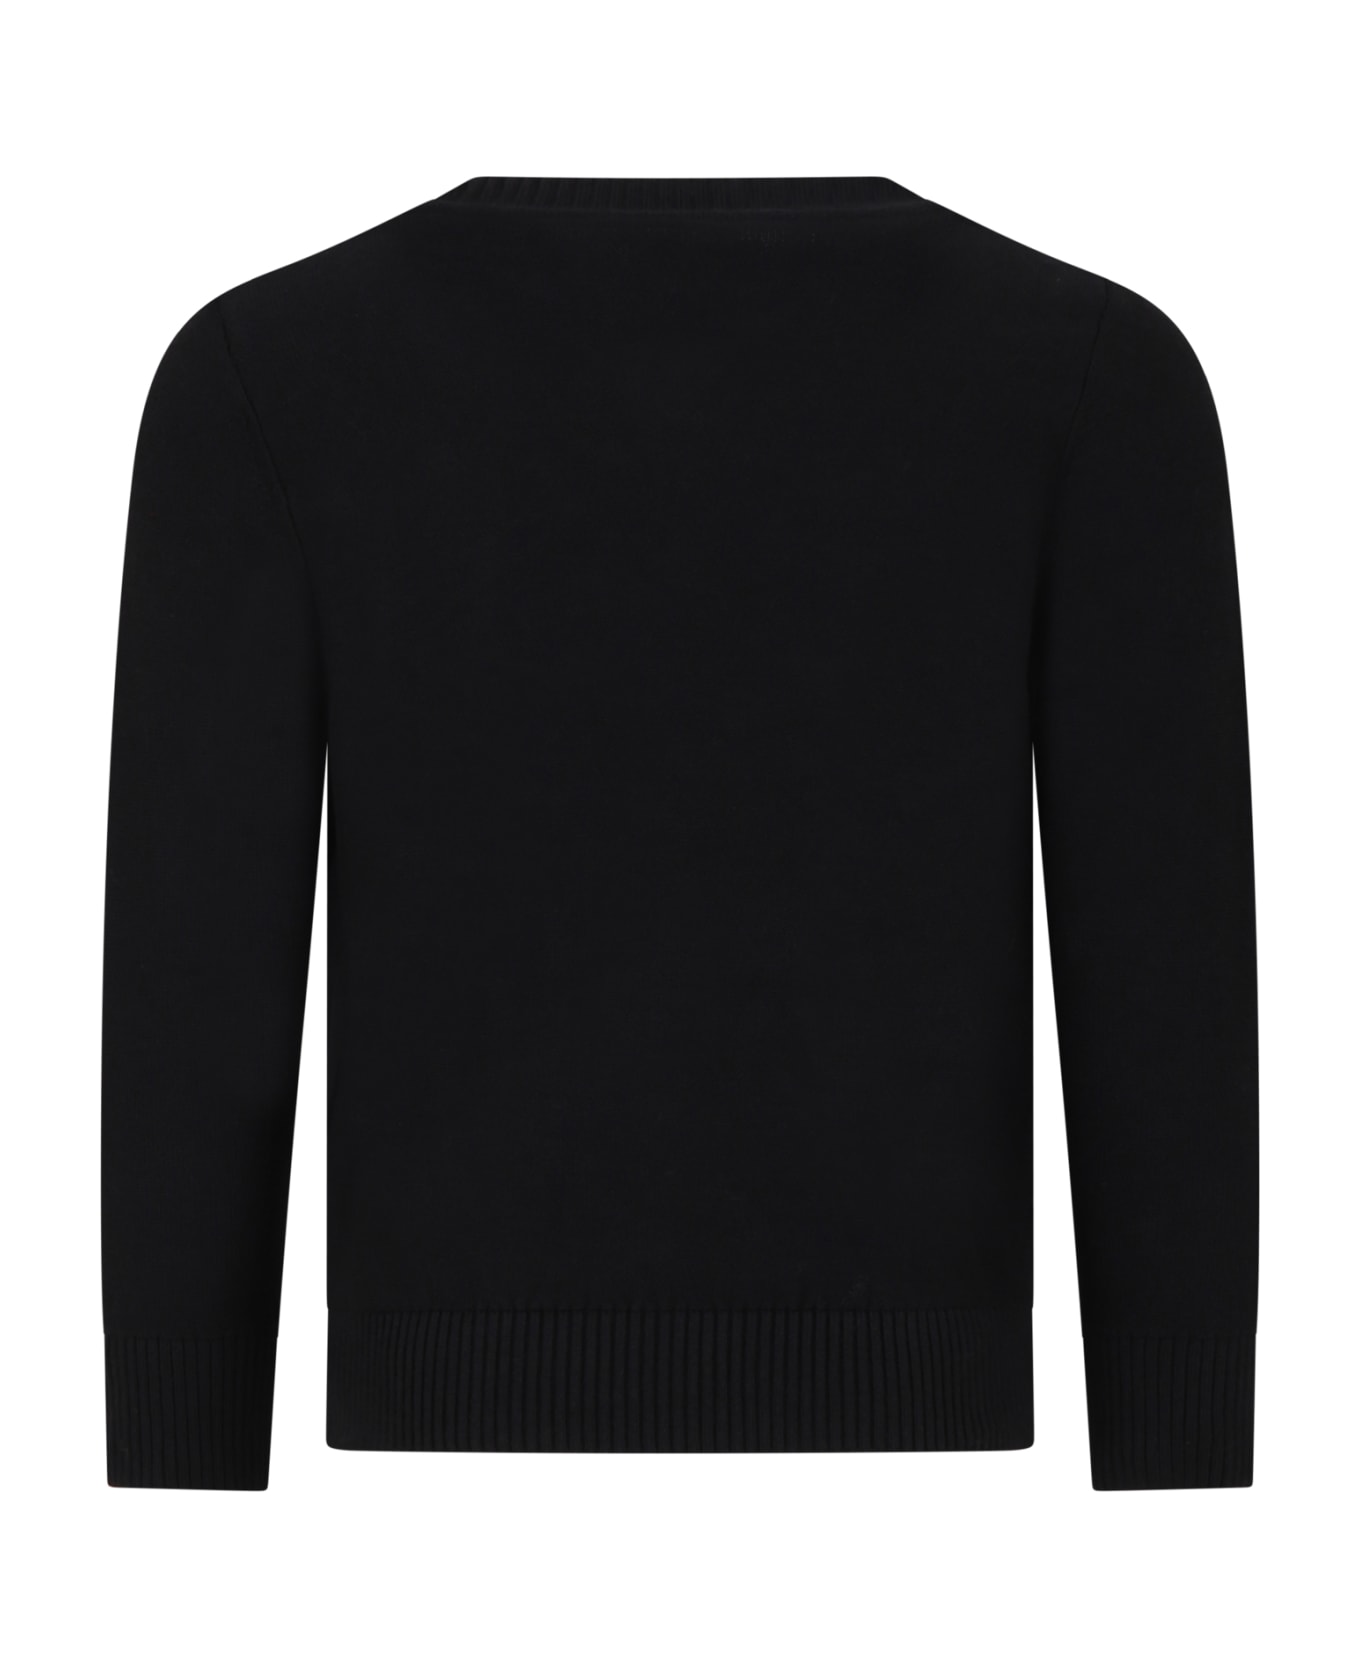 Calvin Klein Black Sweater For Boy With Logo - Black